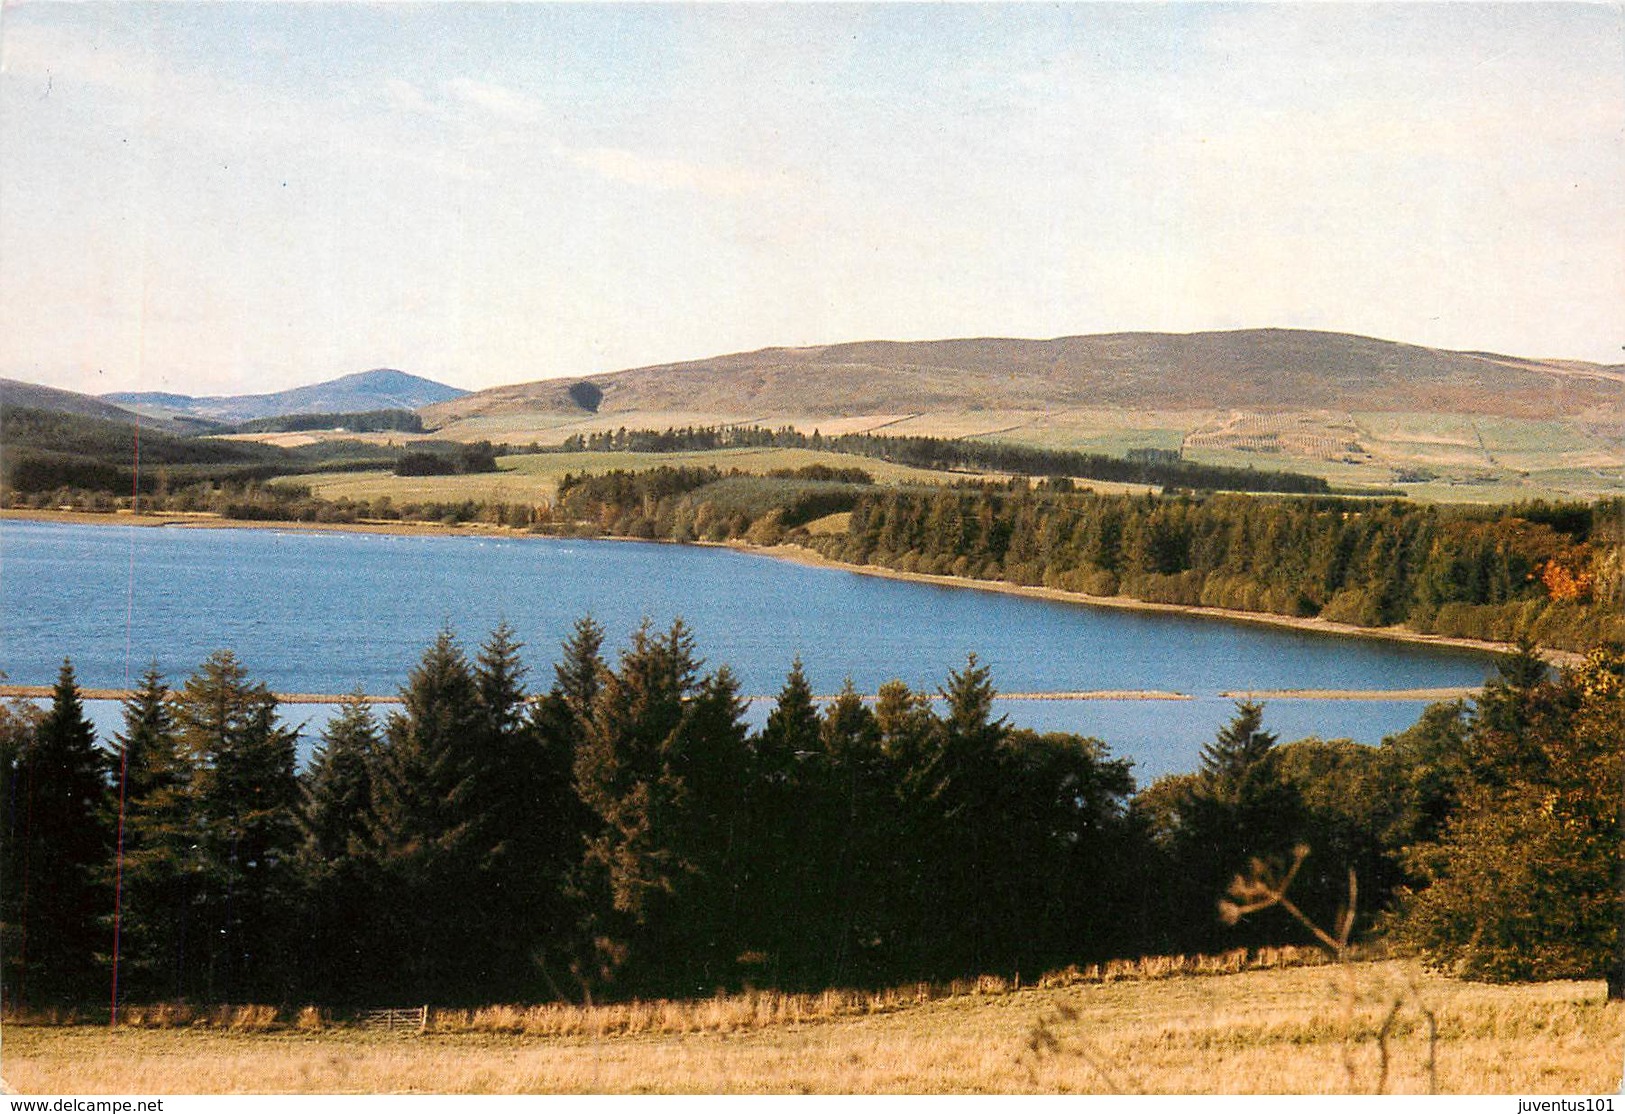 CPSM Loch Glenisla-Dundee                                                 L2661 - Angus